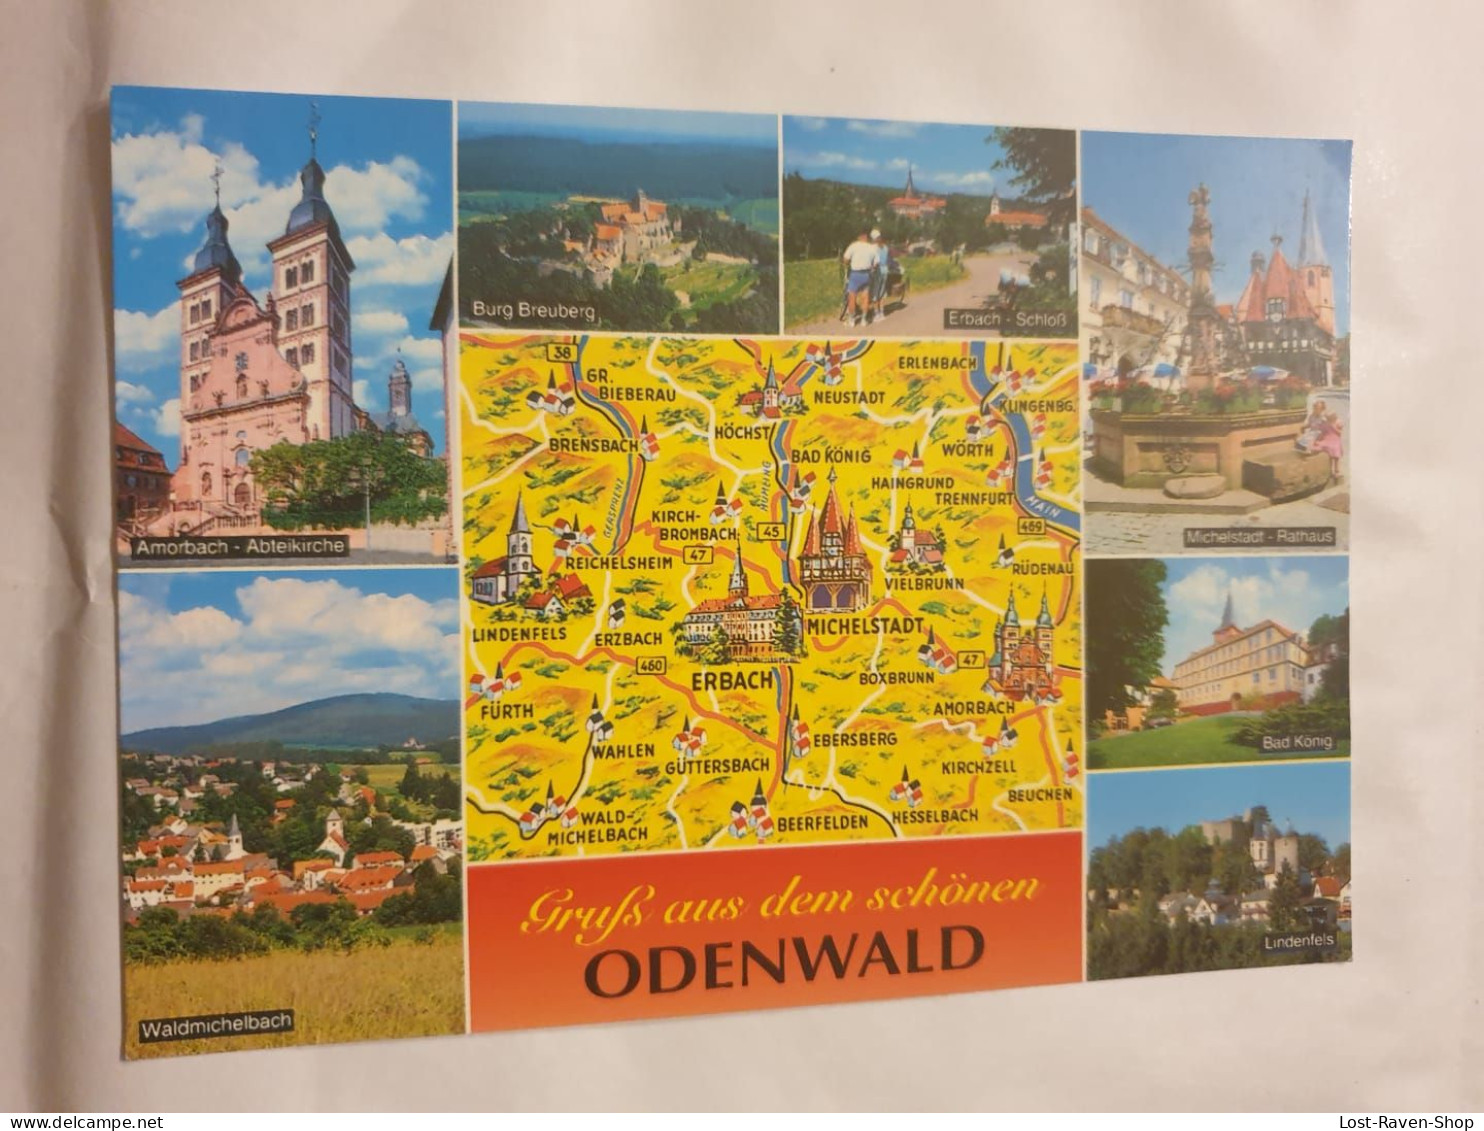 Odenwald - Maps